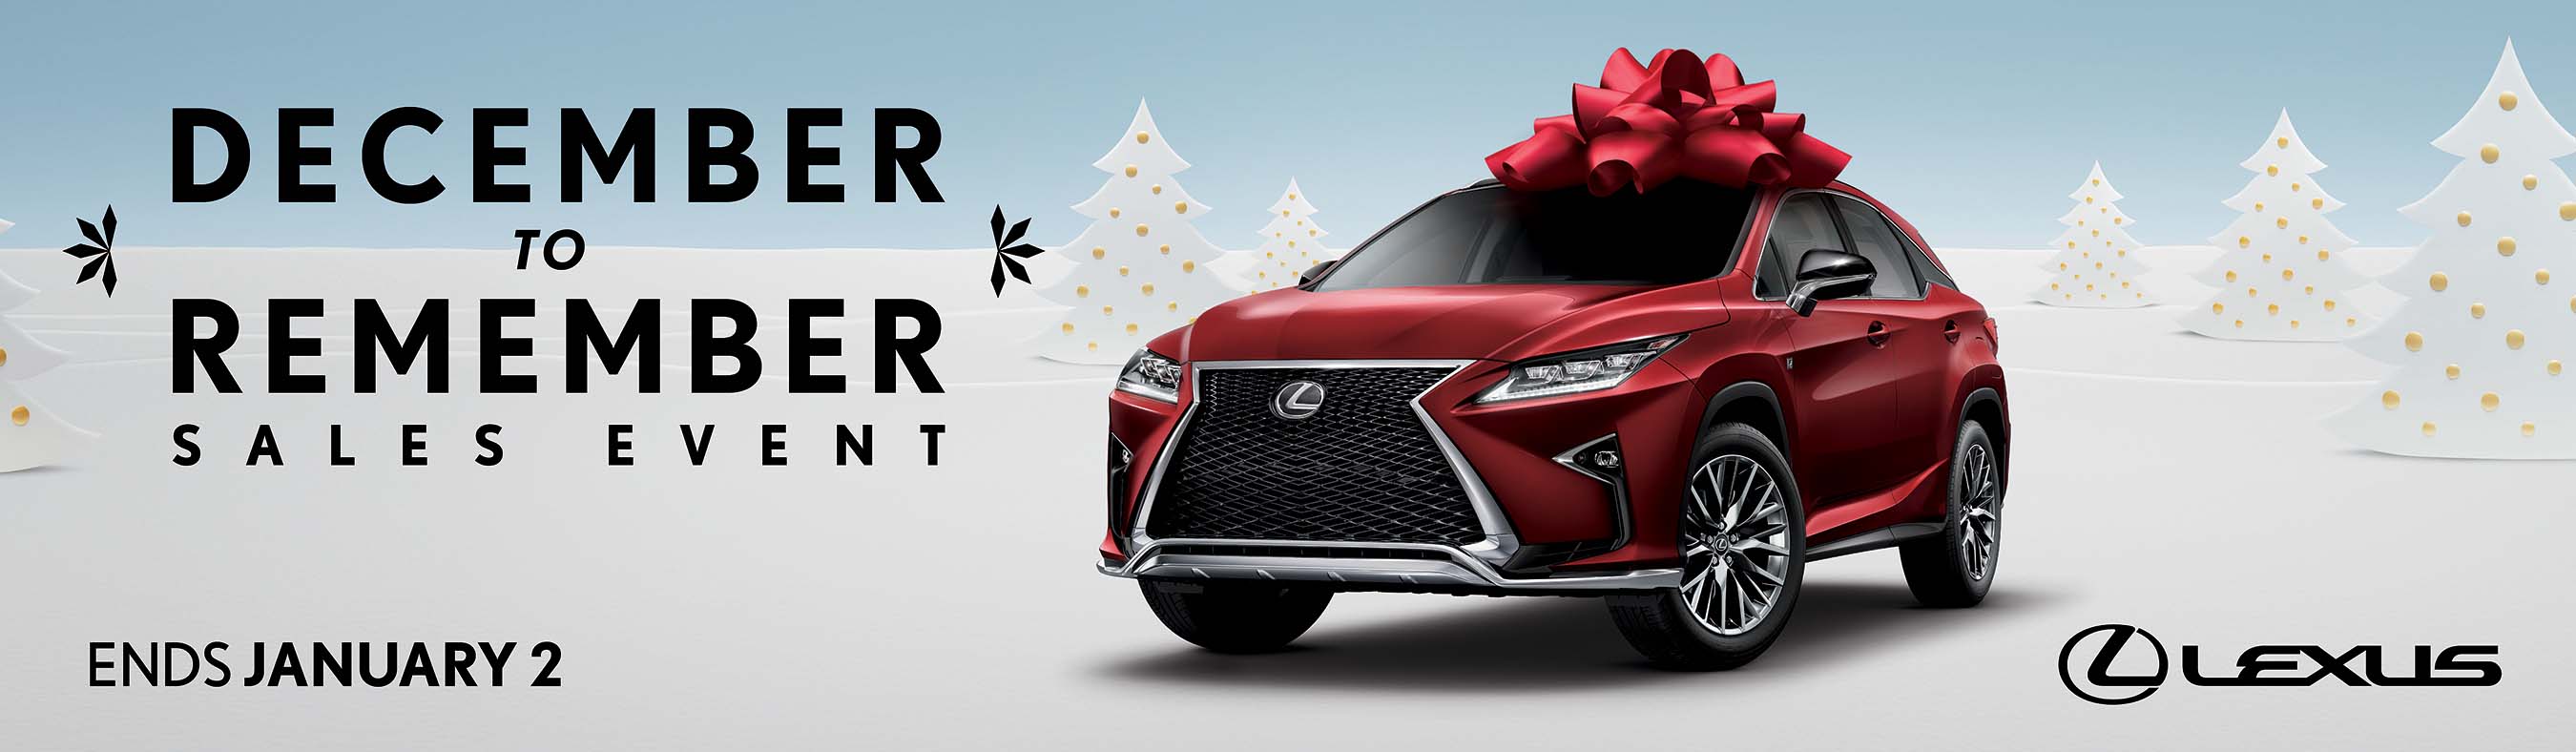 Lexus december sales event